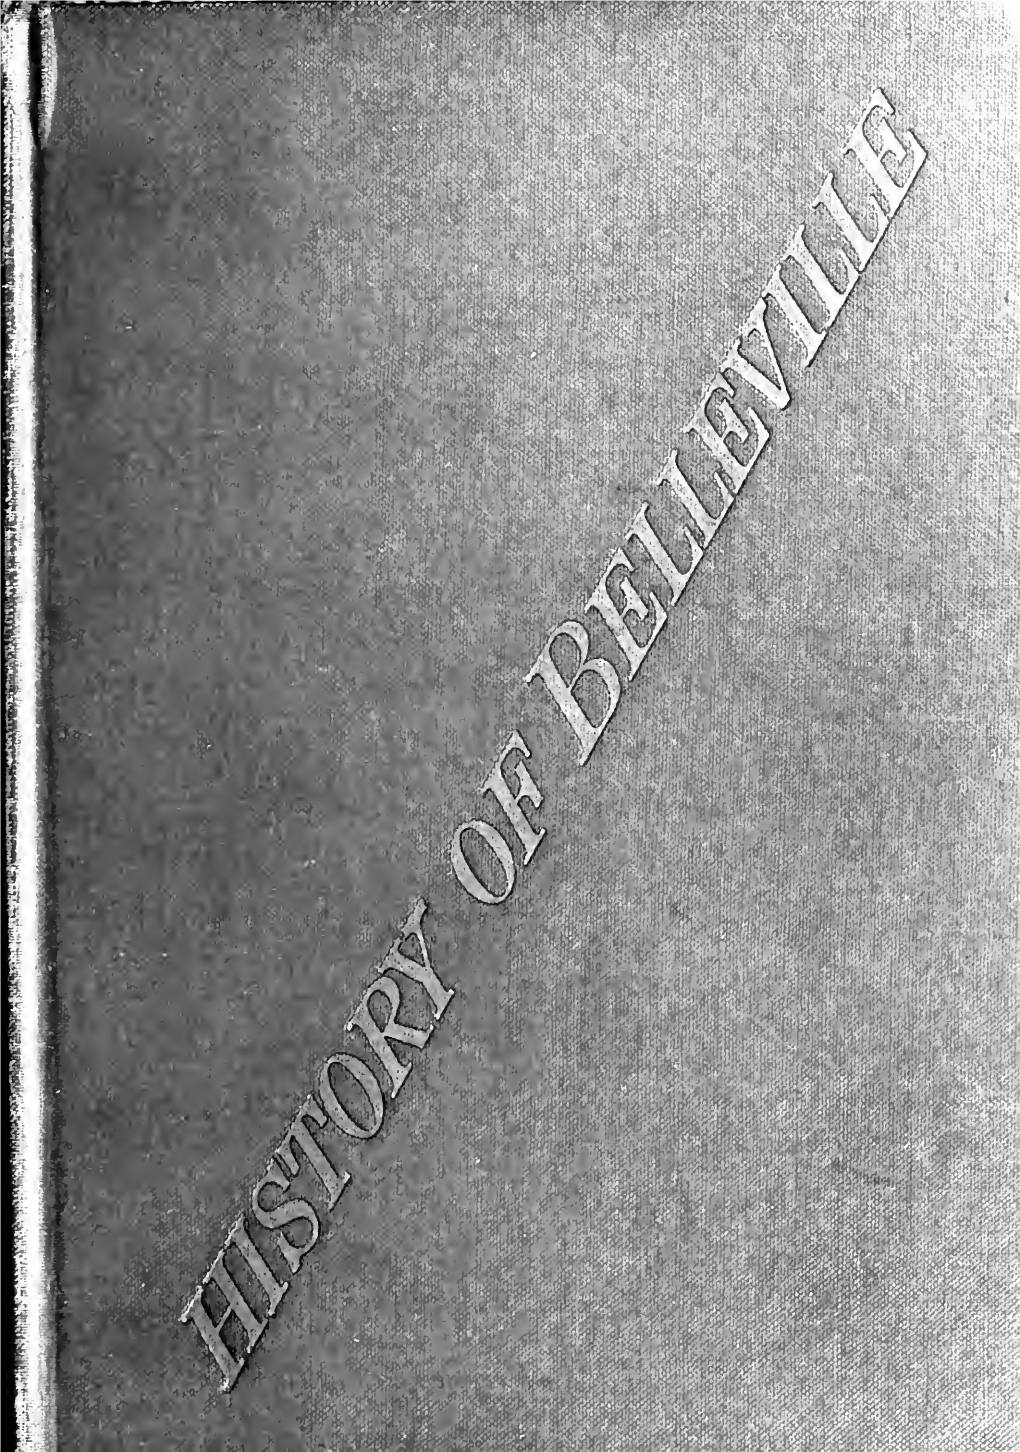 History of Belleville, Illinois. Pub:1951